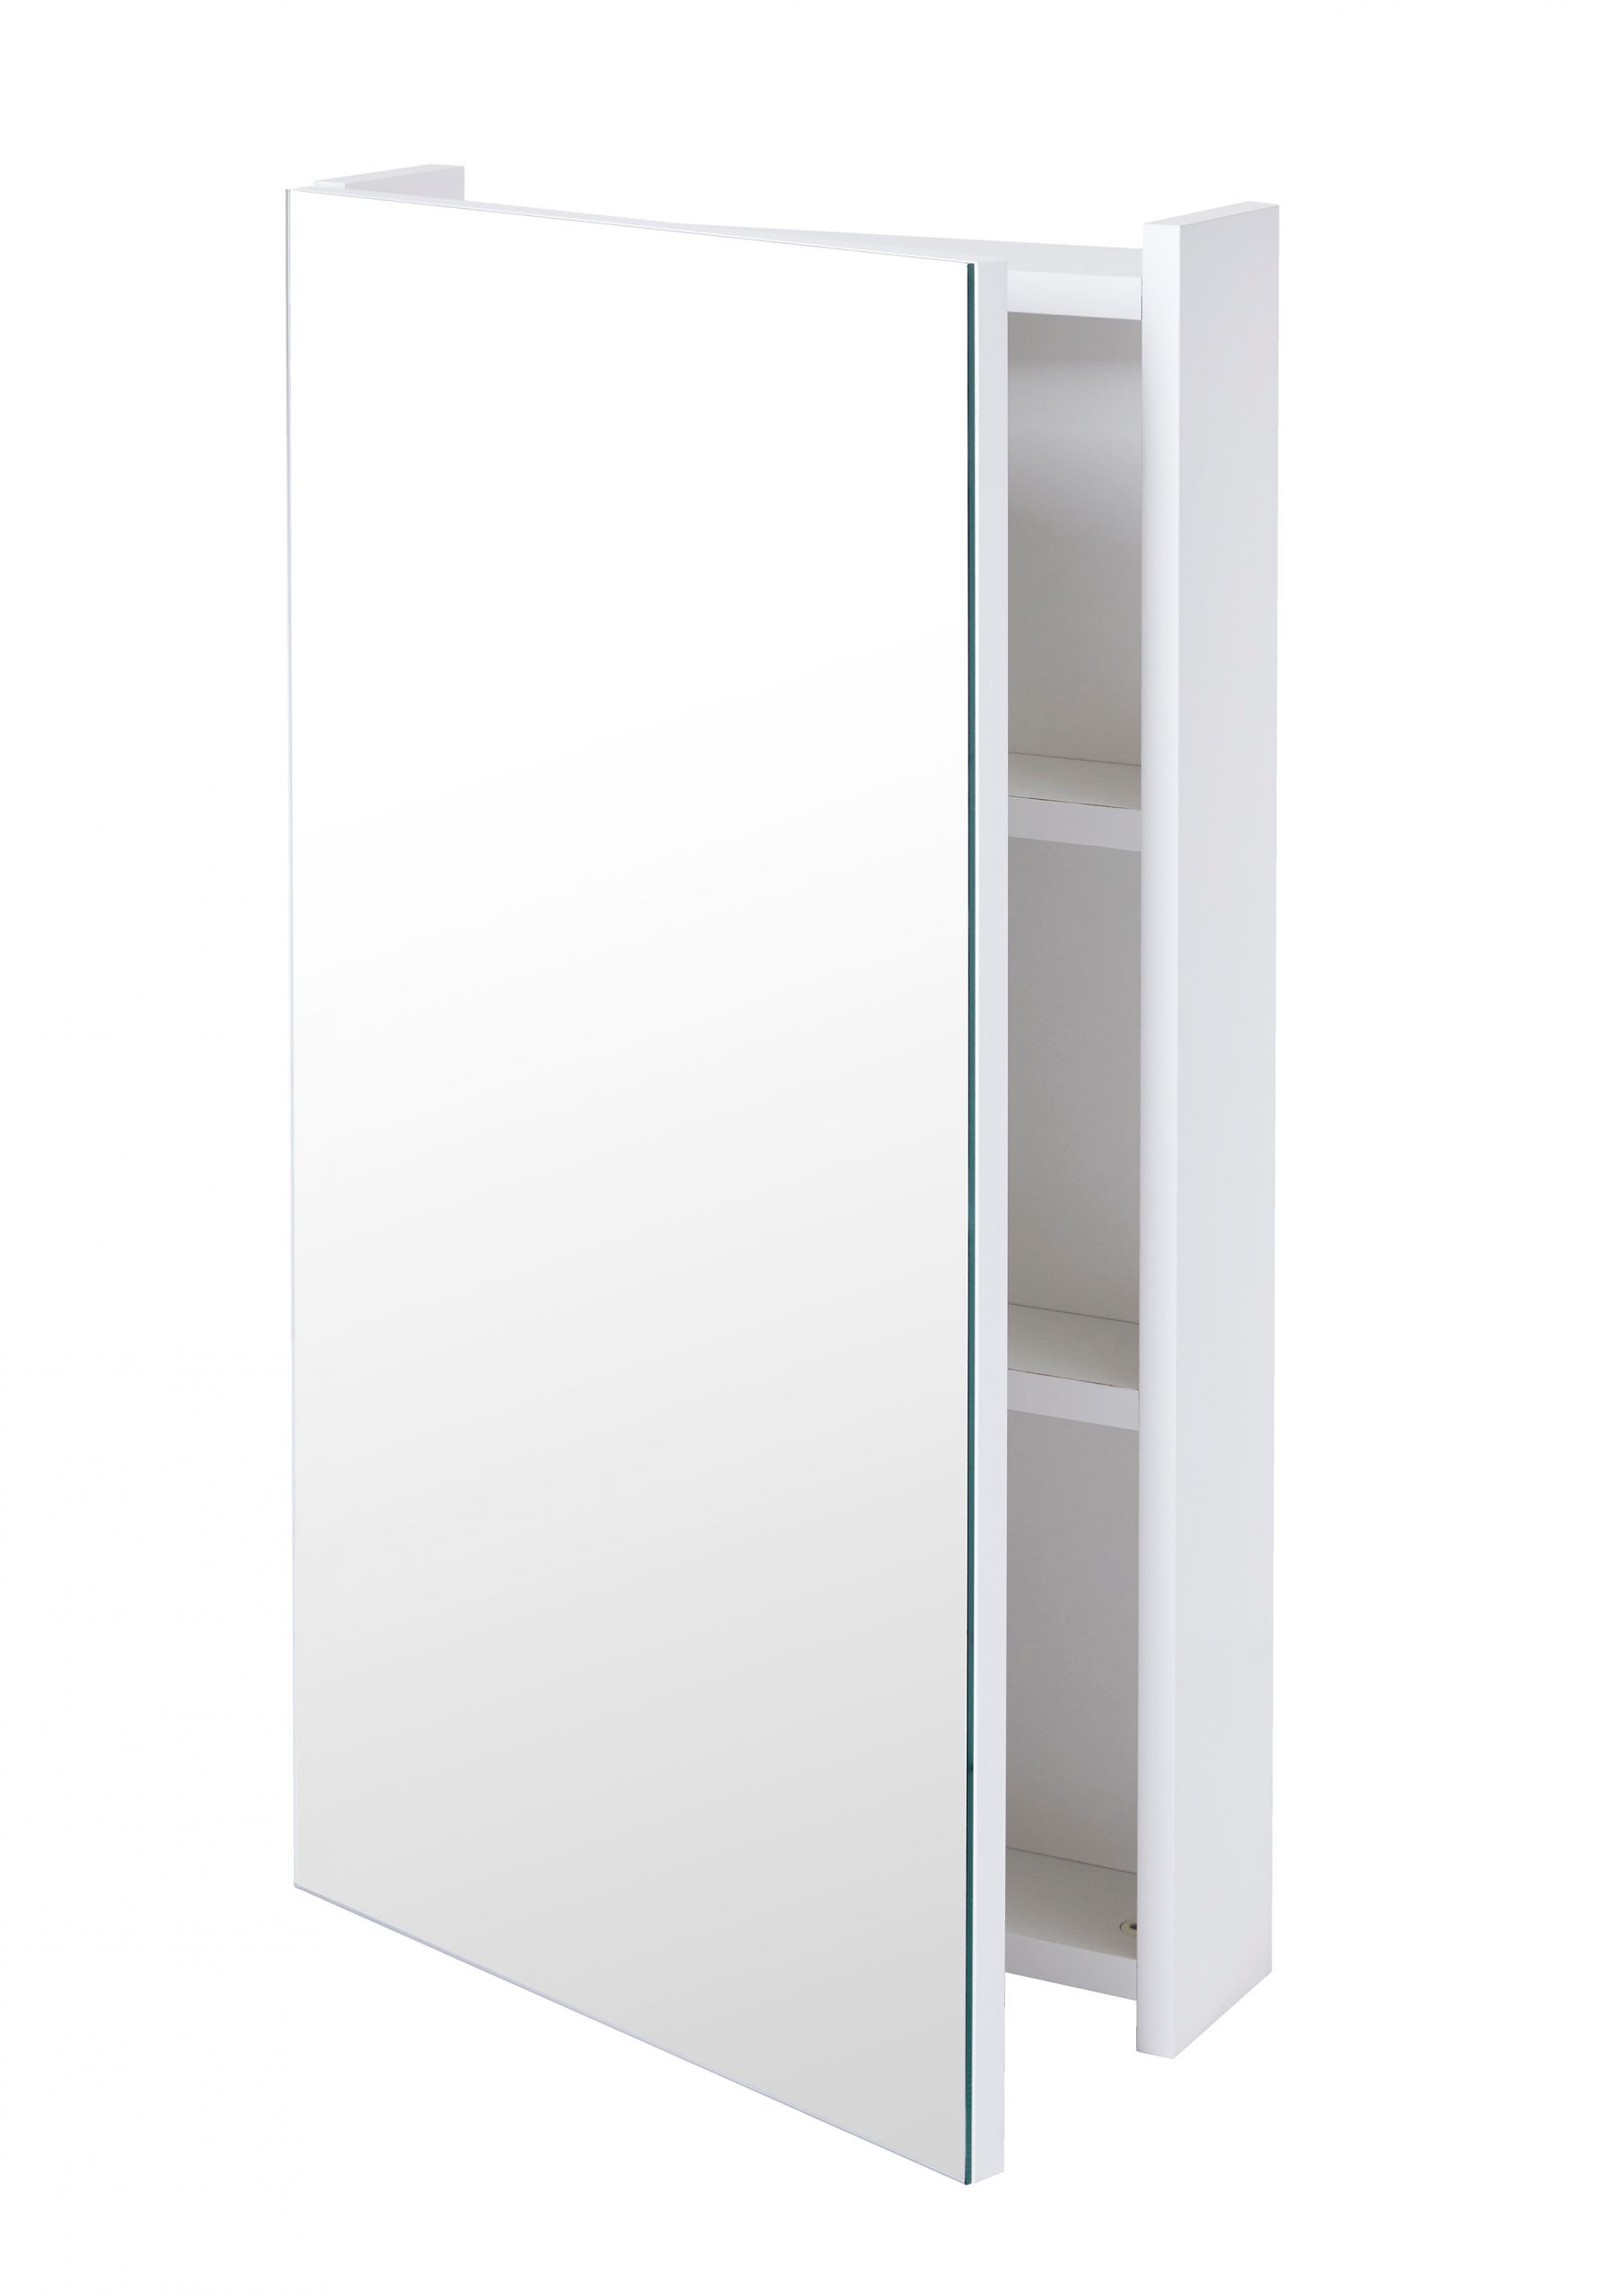 The M-255 approved Kāinga Ora bathroom mirror cabinet